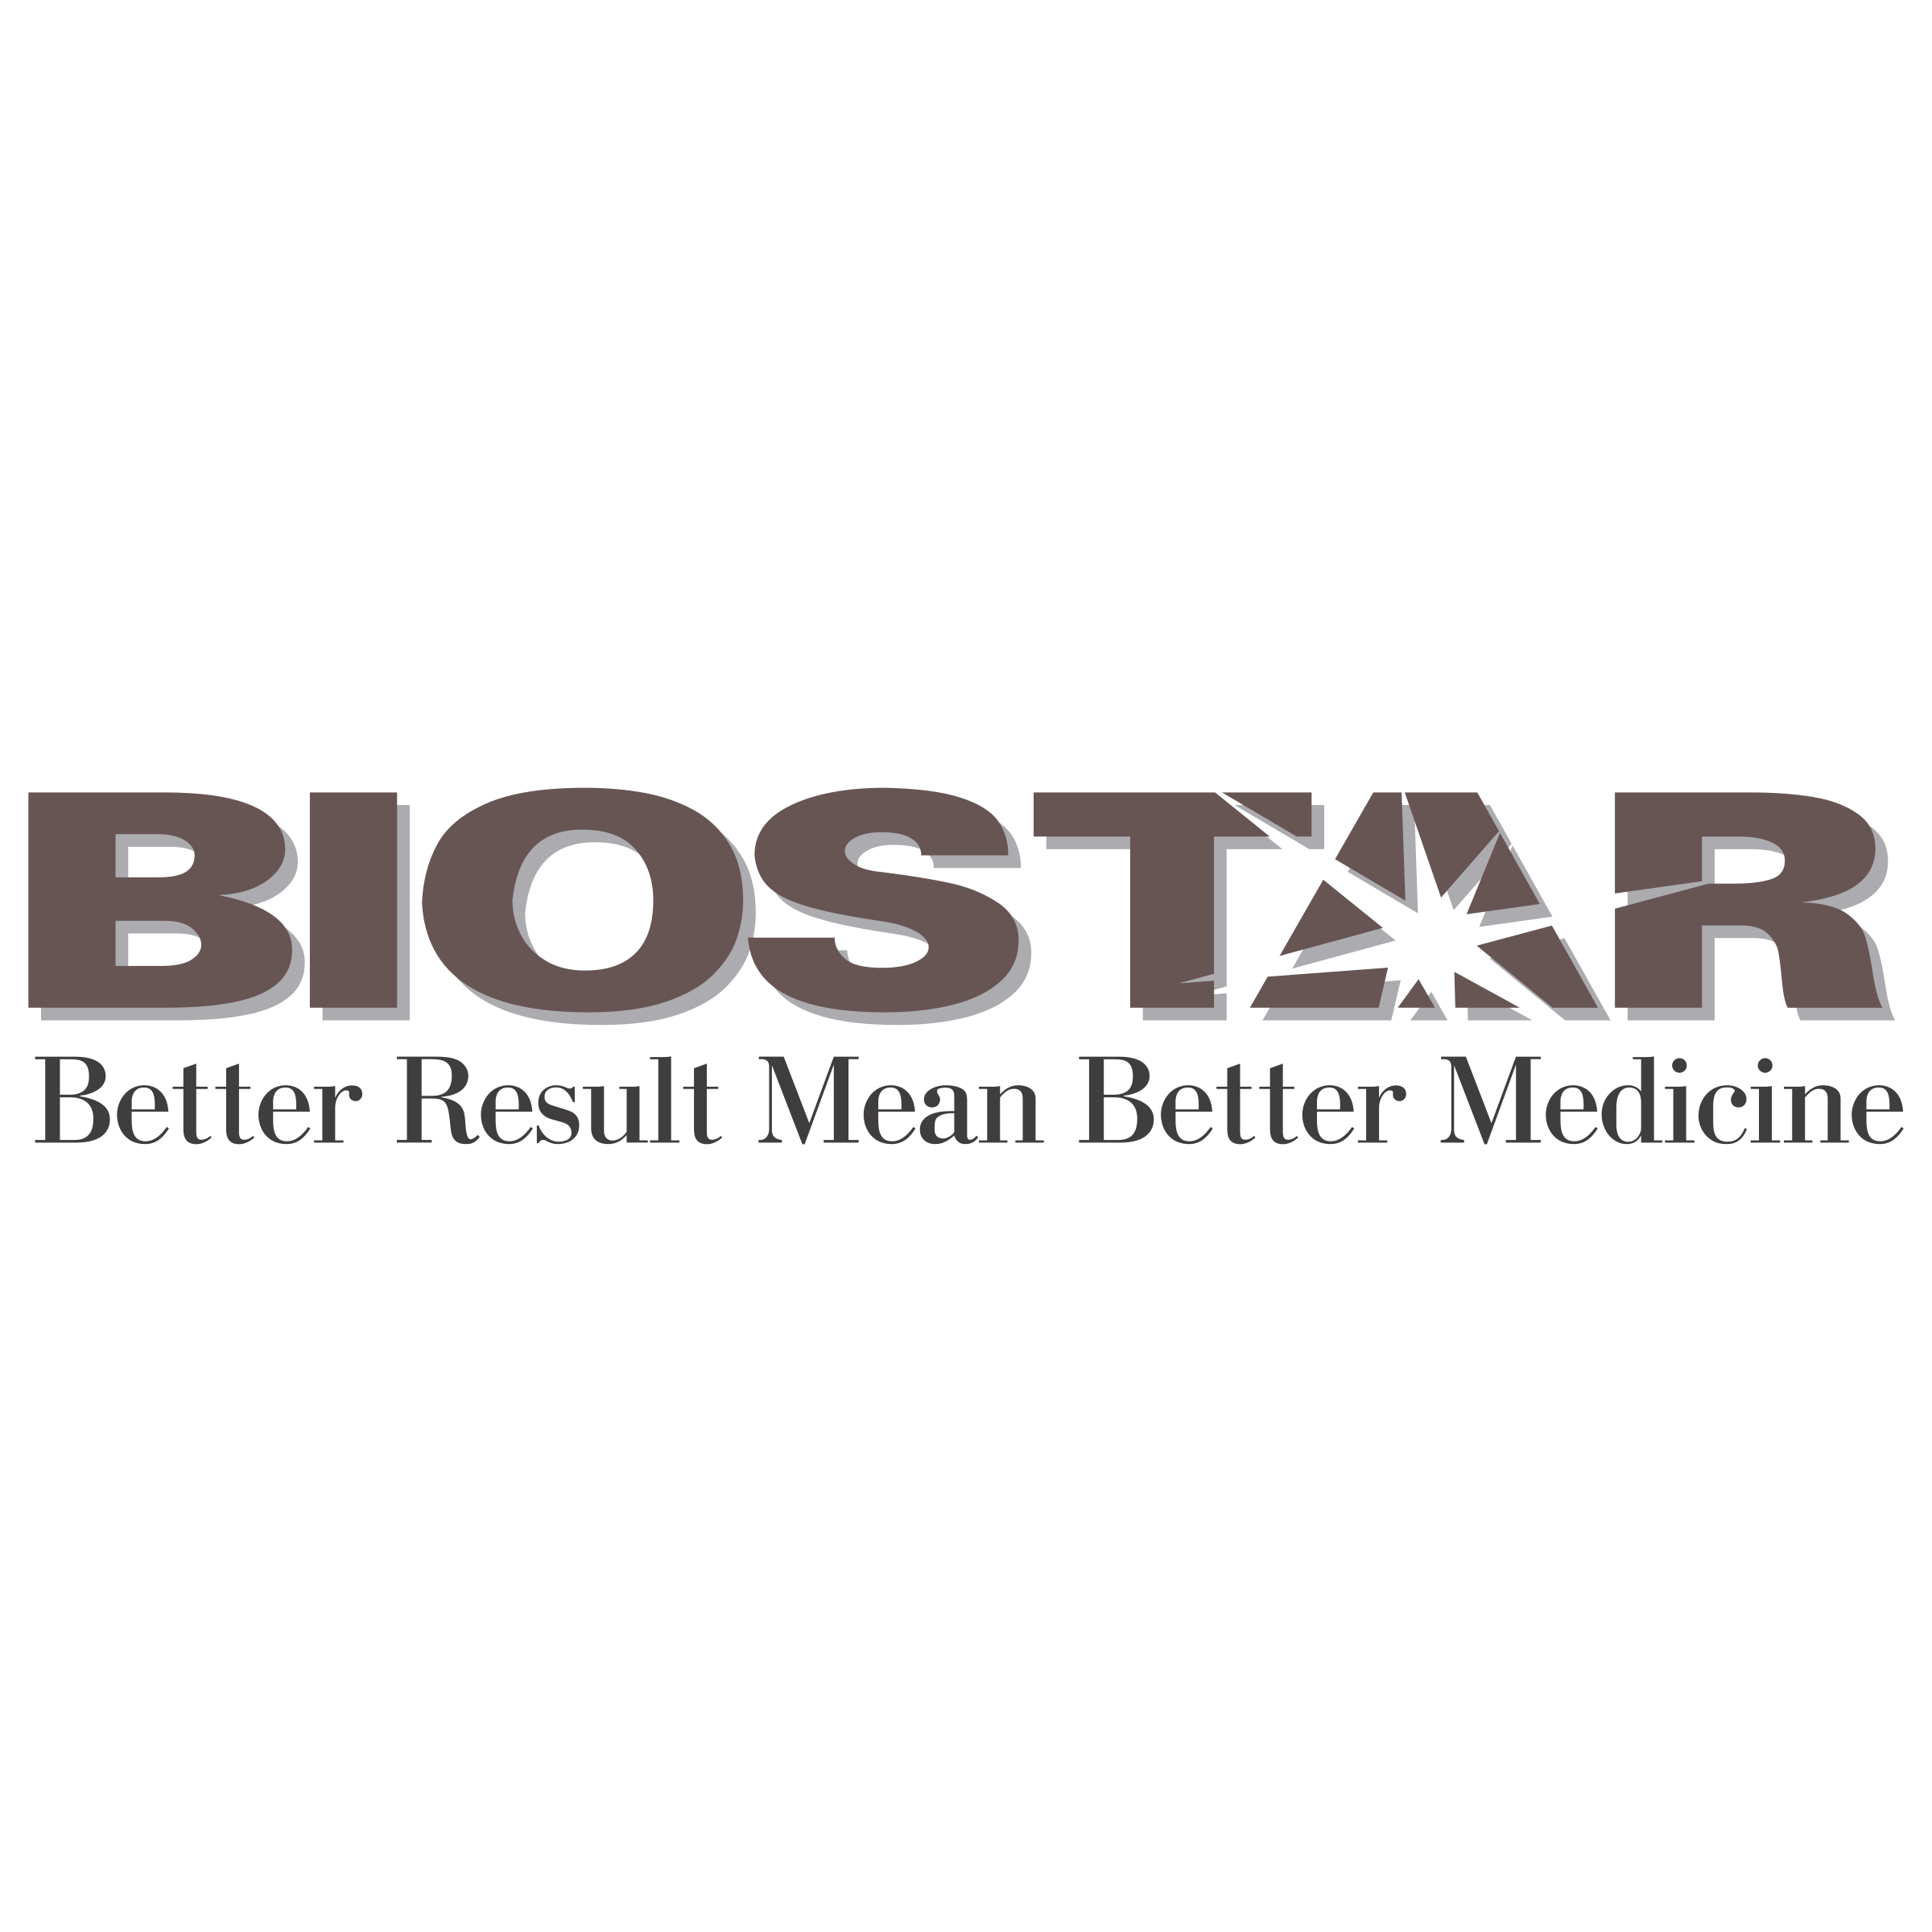 Biostar Logo - Biostar Logo PNG Transparent & SVG Vector - Freebie Supply